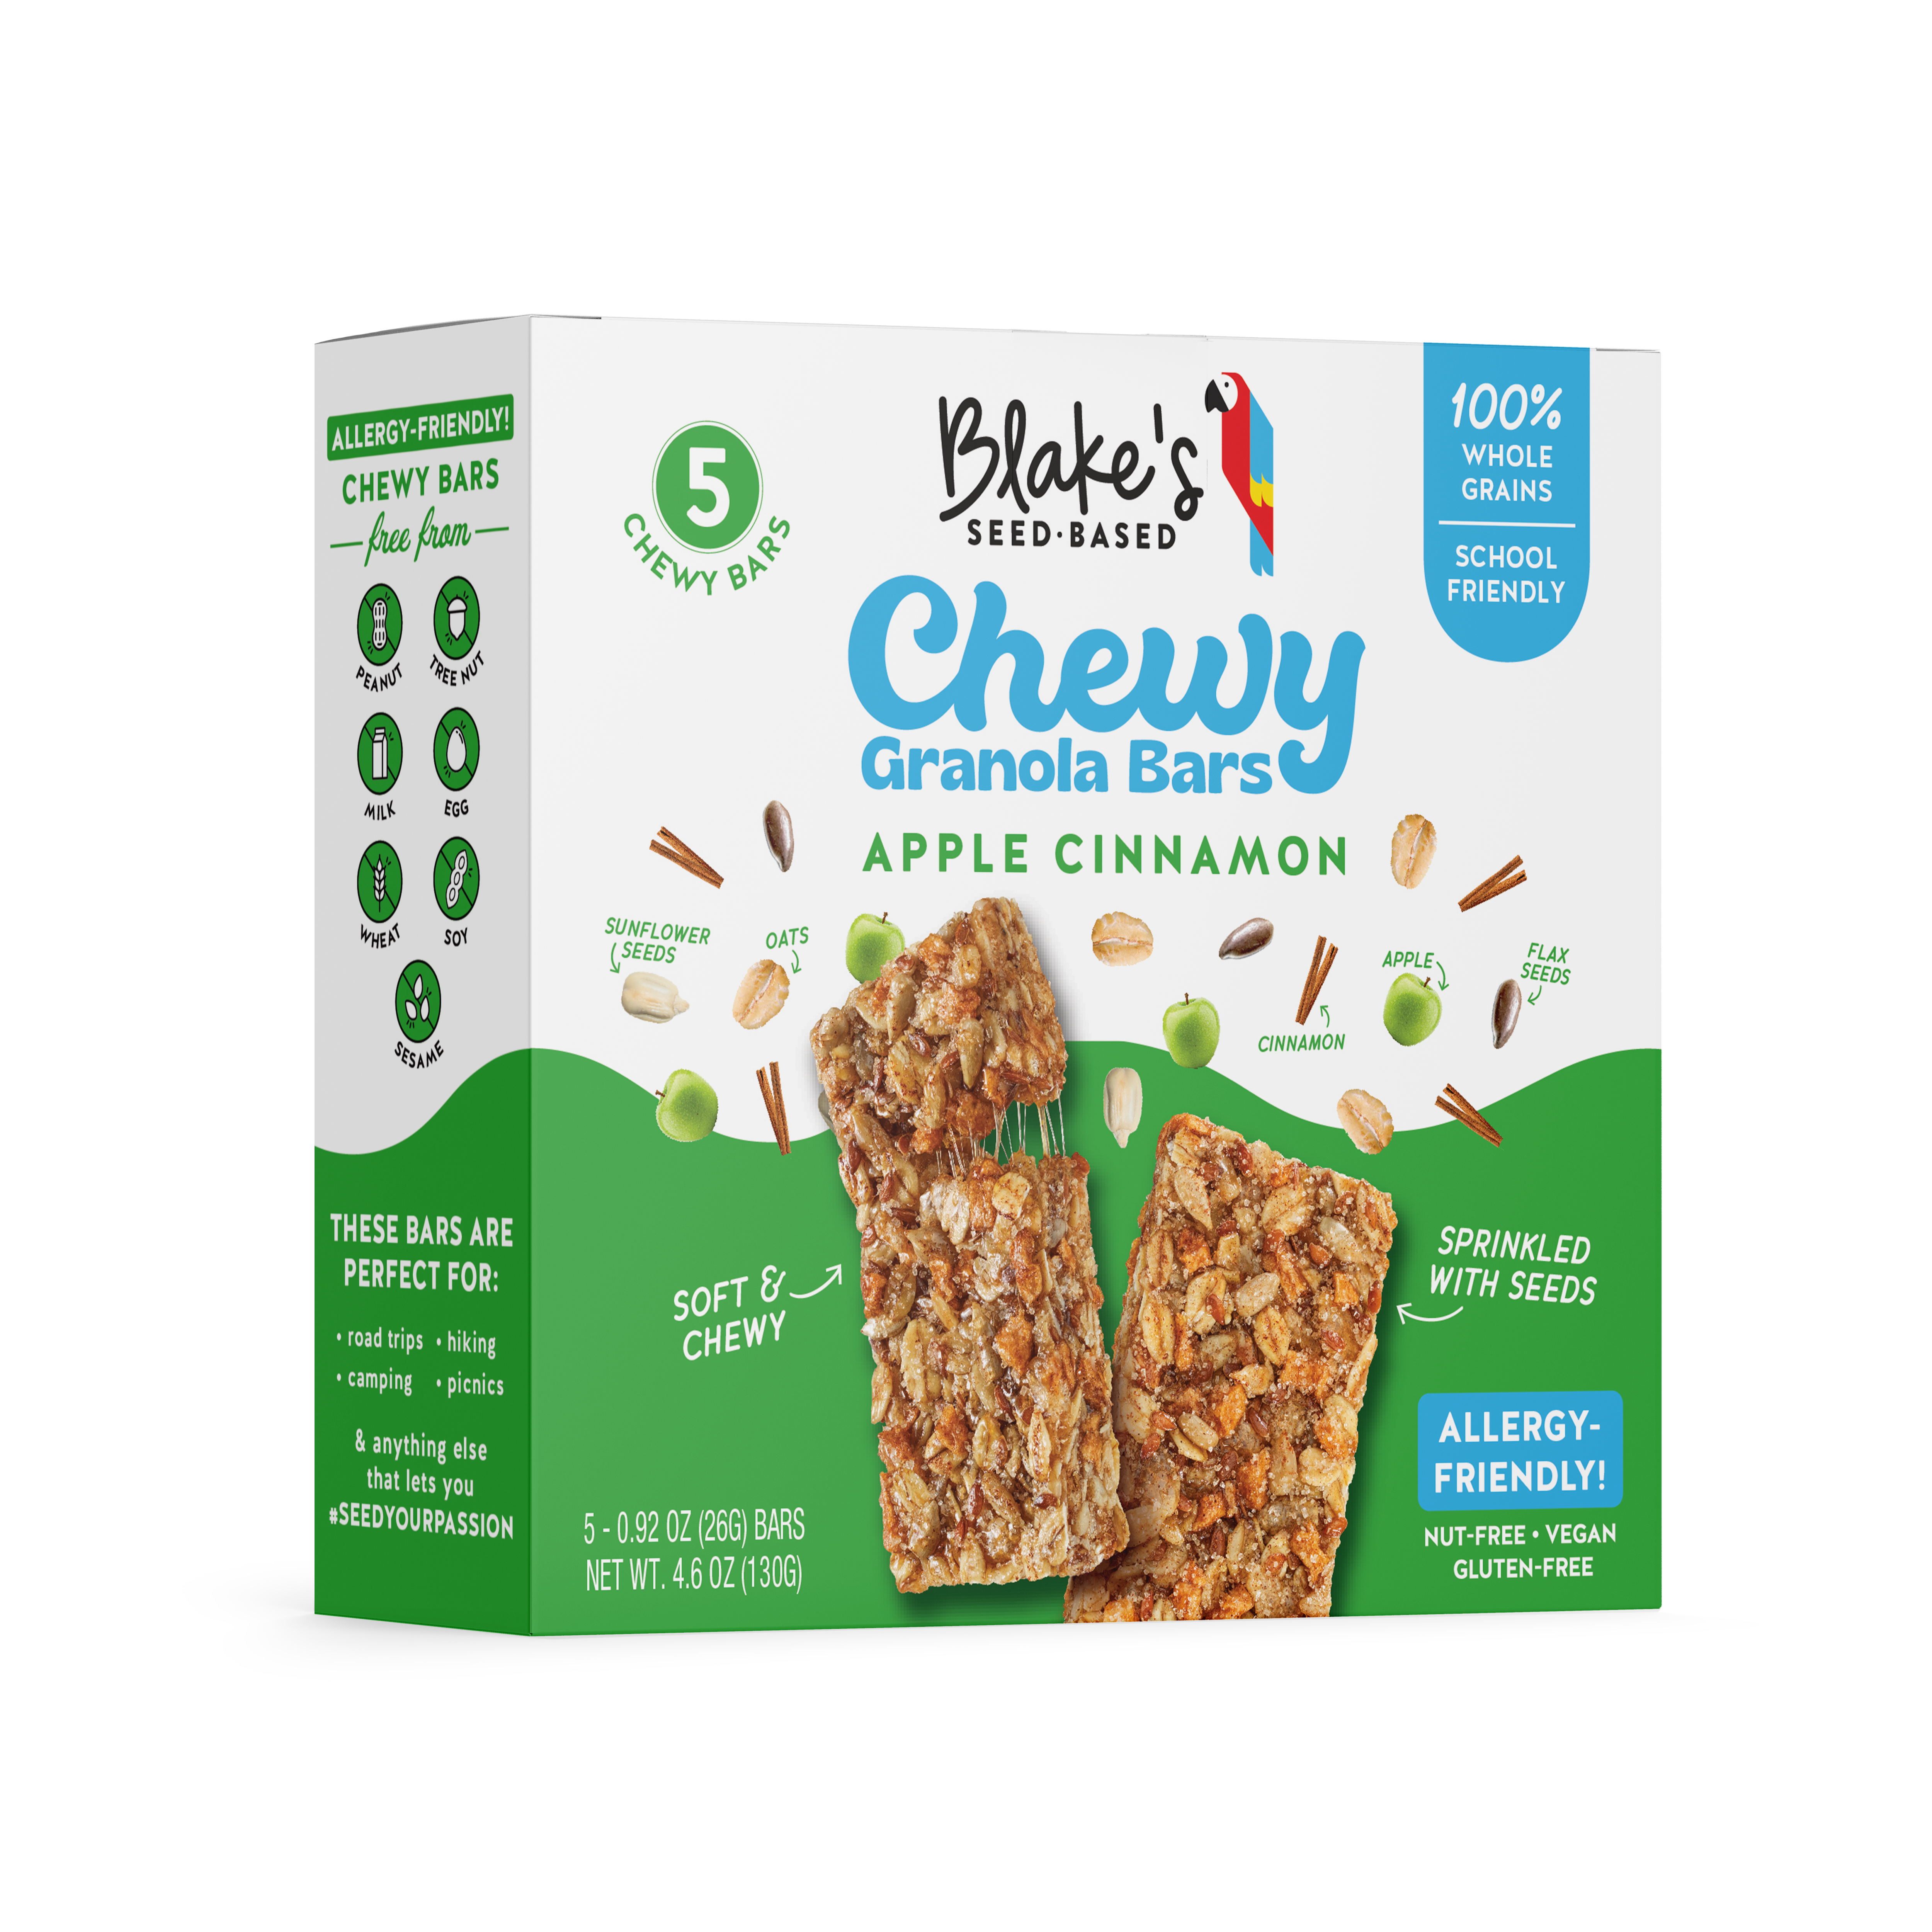 Blake's Seed Based Apple Cinnamon Chewy Granola Bar 12 innerpacks per case 4.6 oz